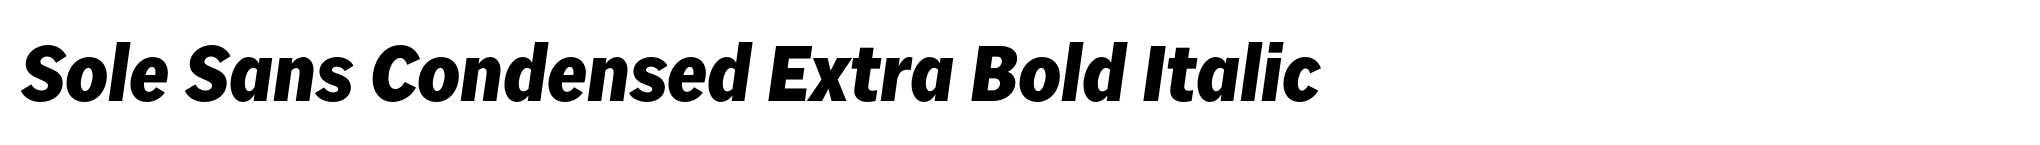 Sole Sans Condensed Extra Bold Italic image